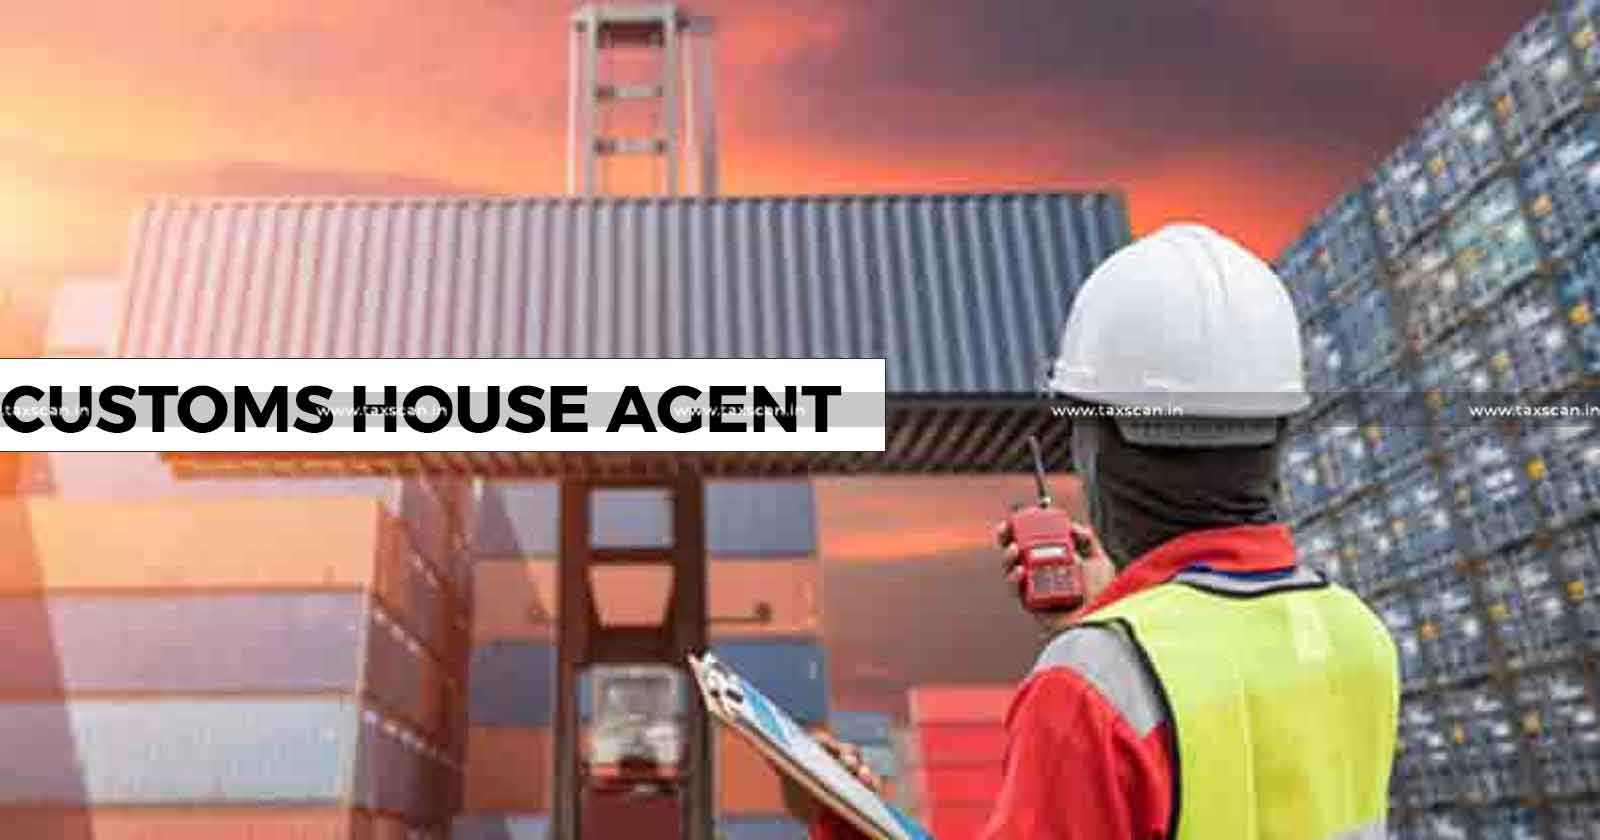 CESTAT - CESTAT Ahmedabad - Customs House Agent - CHA Assessment Advice - Customs House Agent Regulation - TAXSCAN